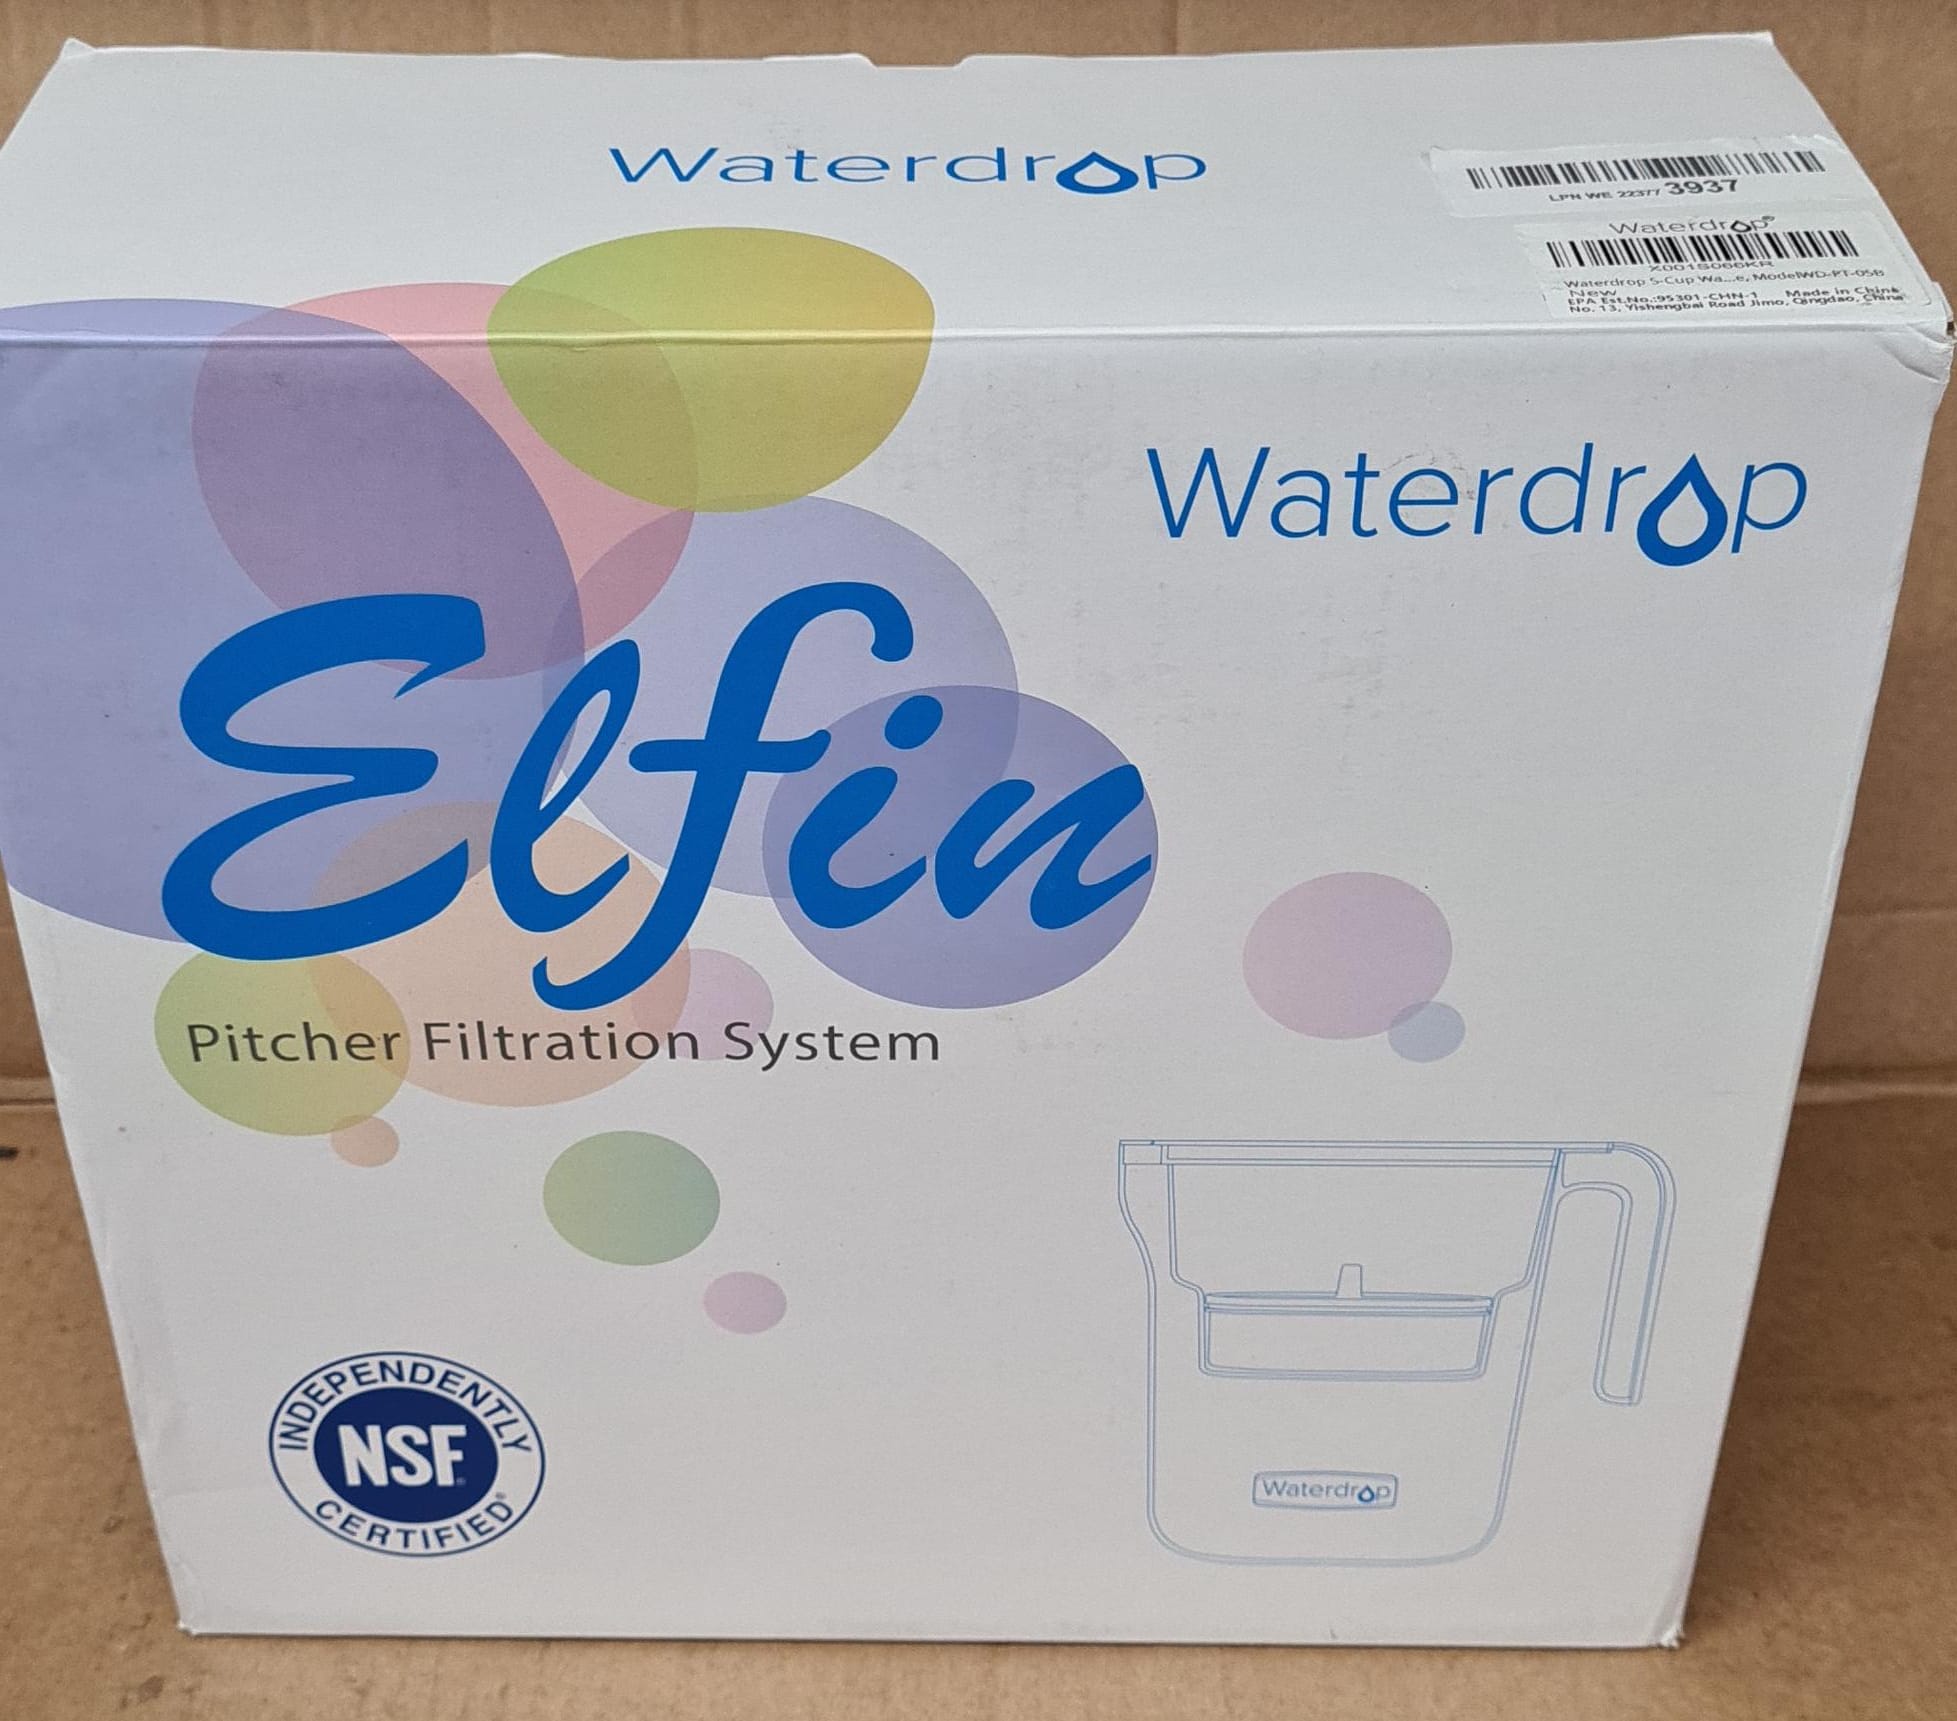 Waterdrop Elfin Fridge Water Filter Jug-3937